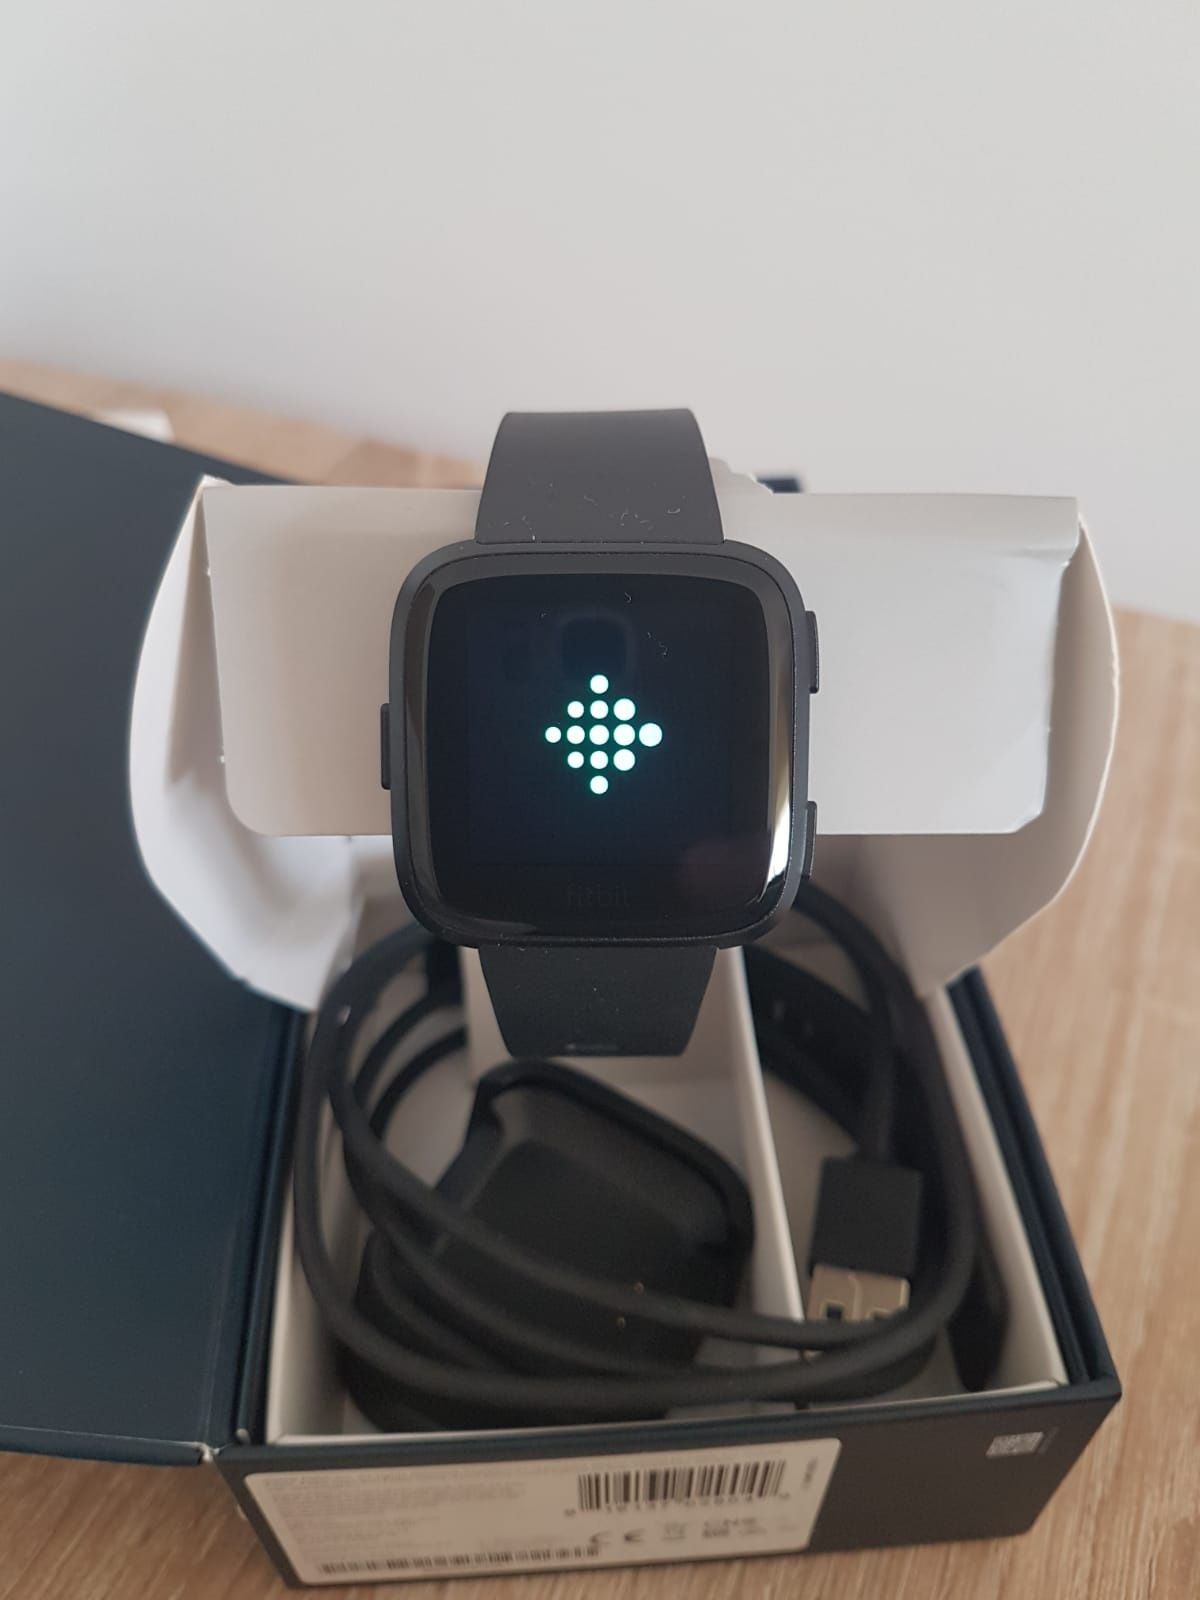 Ceas smartwatch FitBit Versa Nou